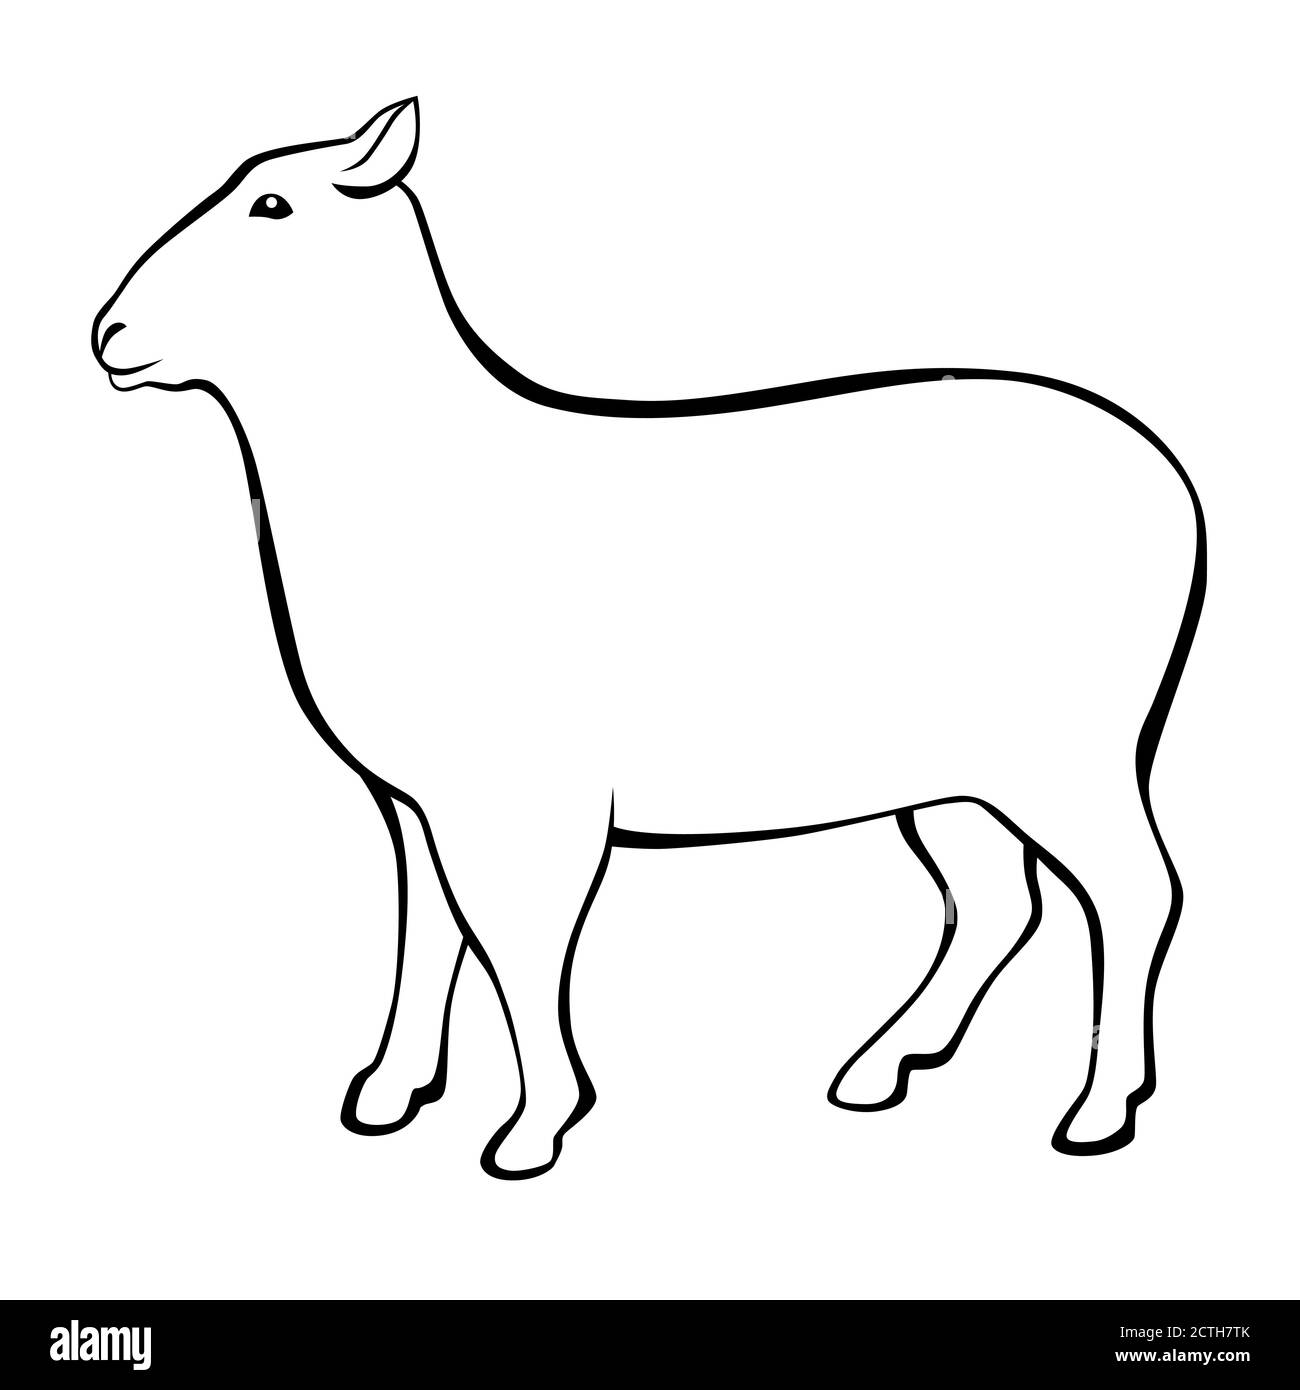 Sheep black white isolated illustration vector Stock Vector